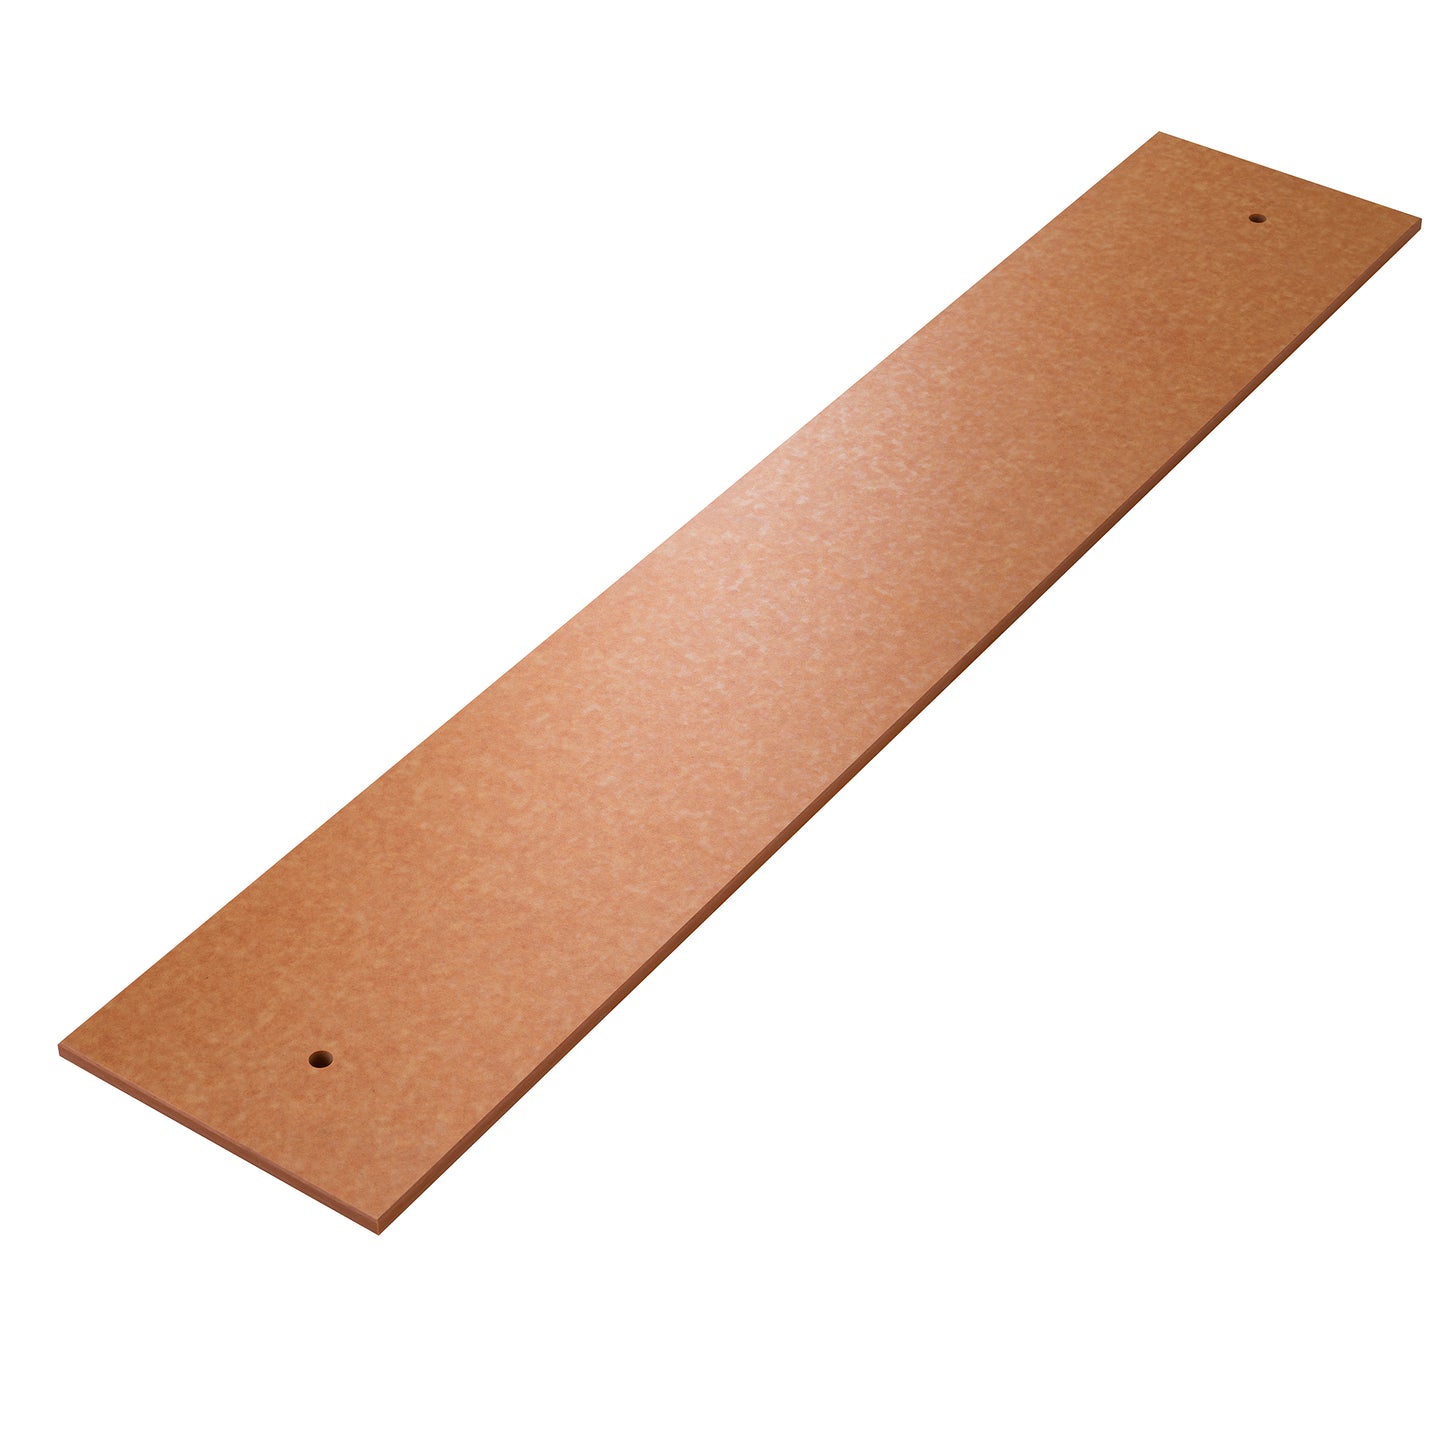 Composite wood-tone cutting board - 1/2" X 11-3/4" X 48-1/4" (SKU - 807775)